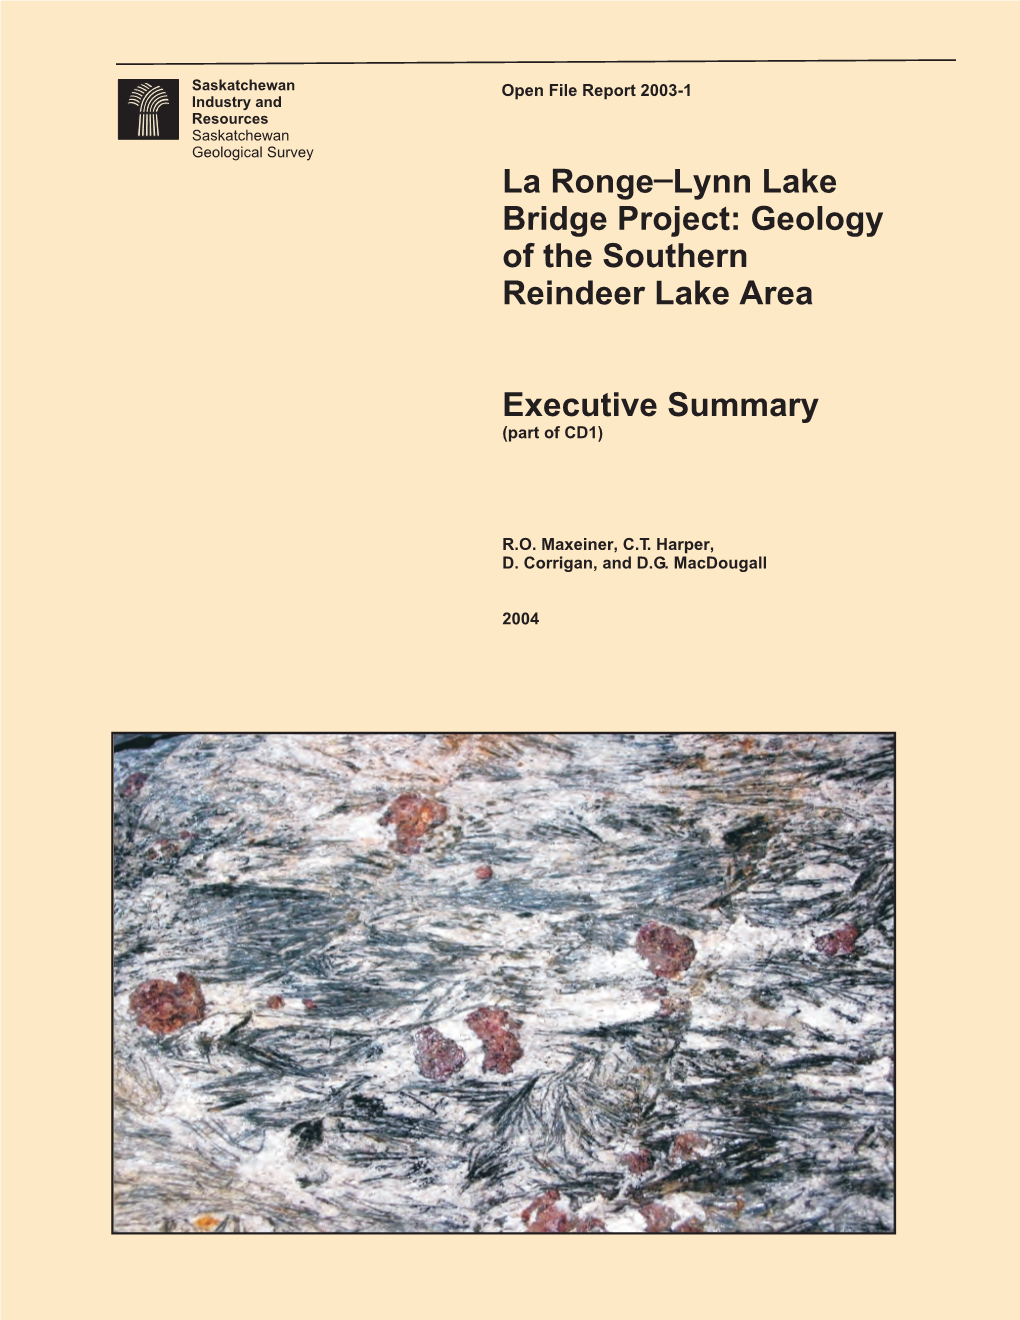 La Ronge Lynn Lake Bridge Project: Geology of the Southern Reindeer Lake Area